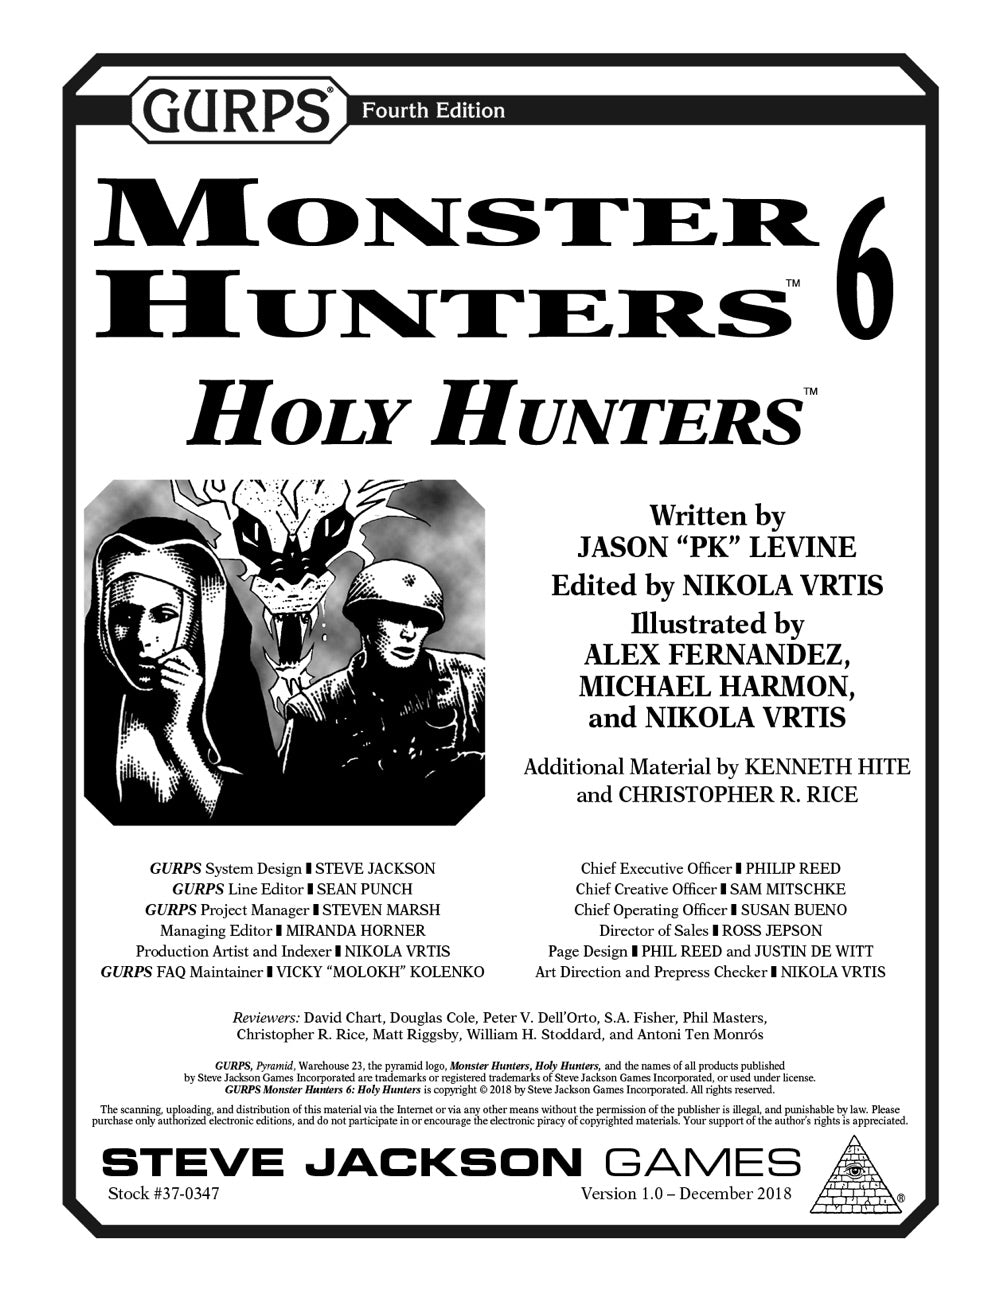 GURPS Monster Hunters 6: Holy Hunters